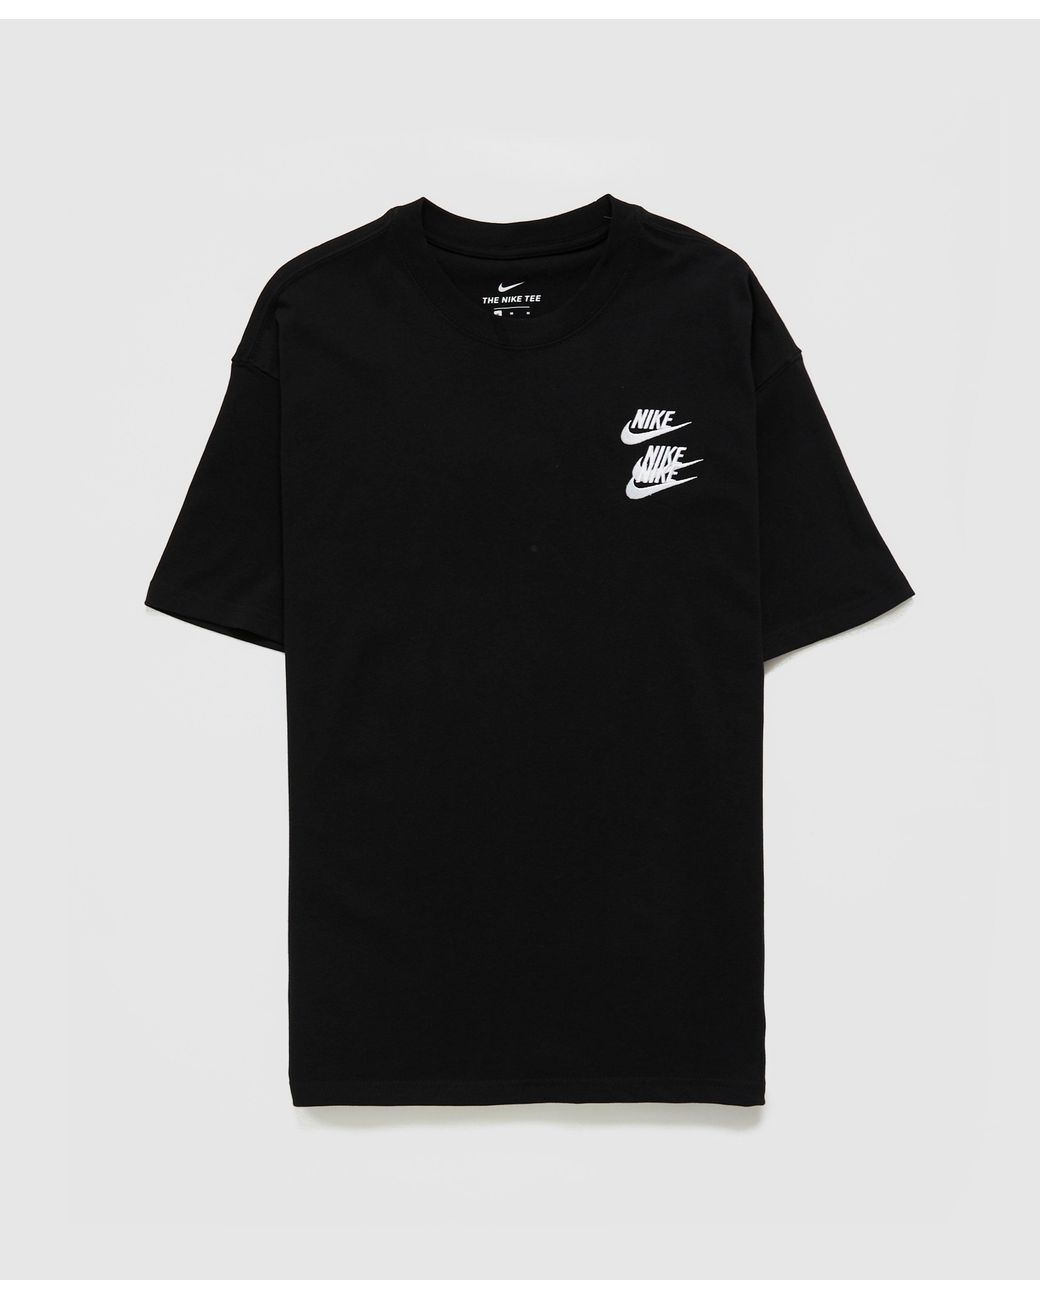 Nike Cotton World Tour T-shirt in Black for Men - Lyst